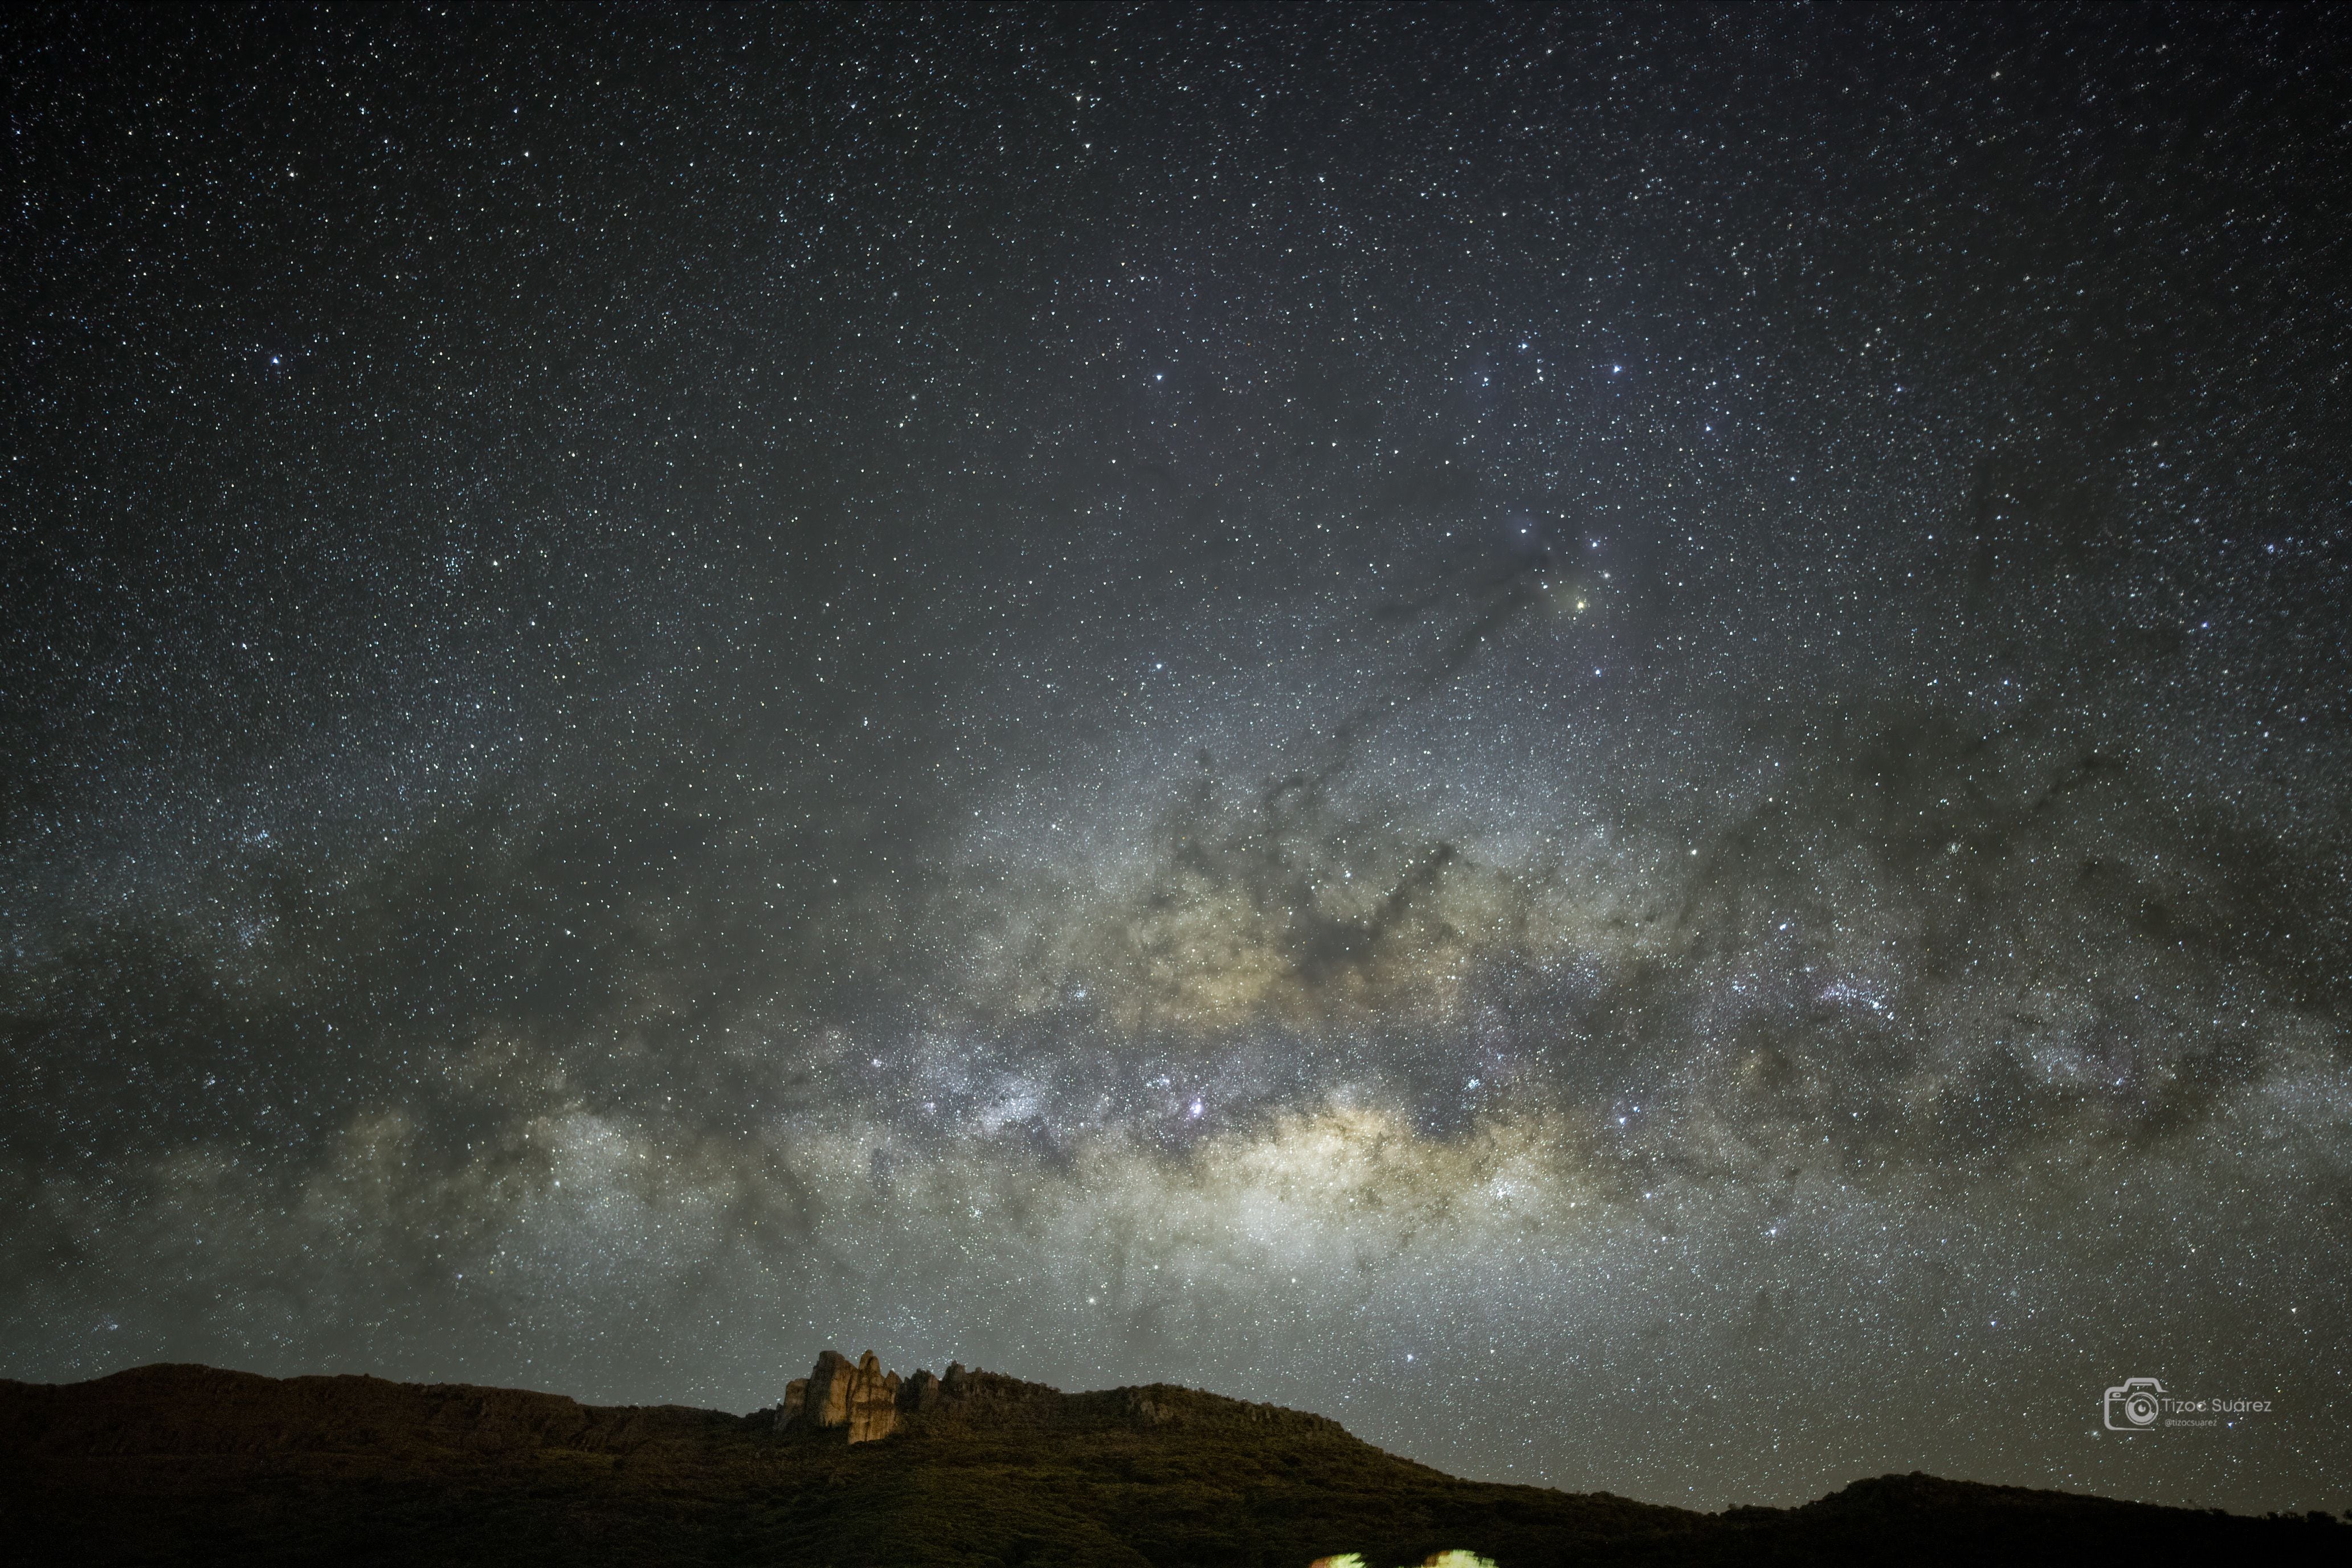 Tizoc Suárez logró fotografiar el centro galáctico de la Vía Láctea dentro del Parque Nacional Chirripó. Fotografía: Tizoc Suárez para LN.